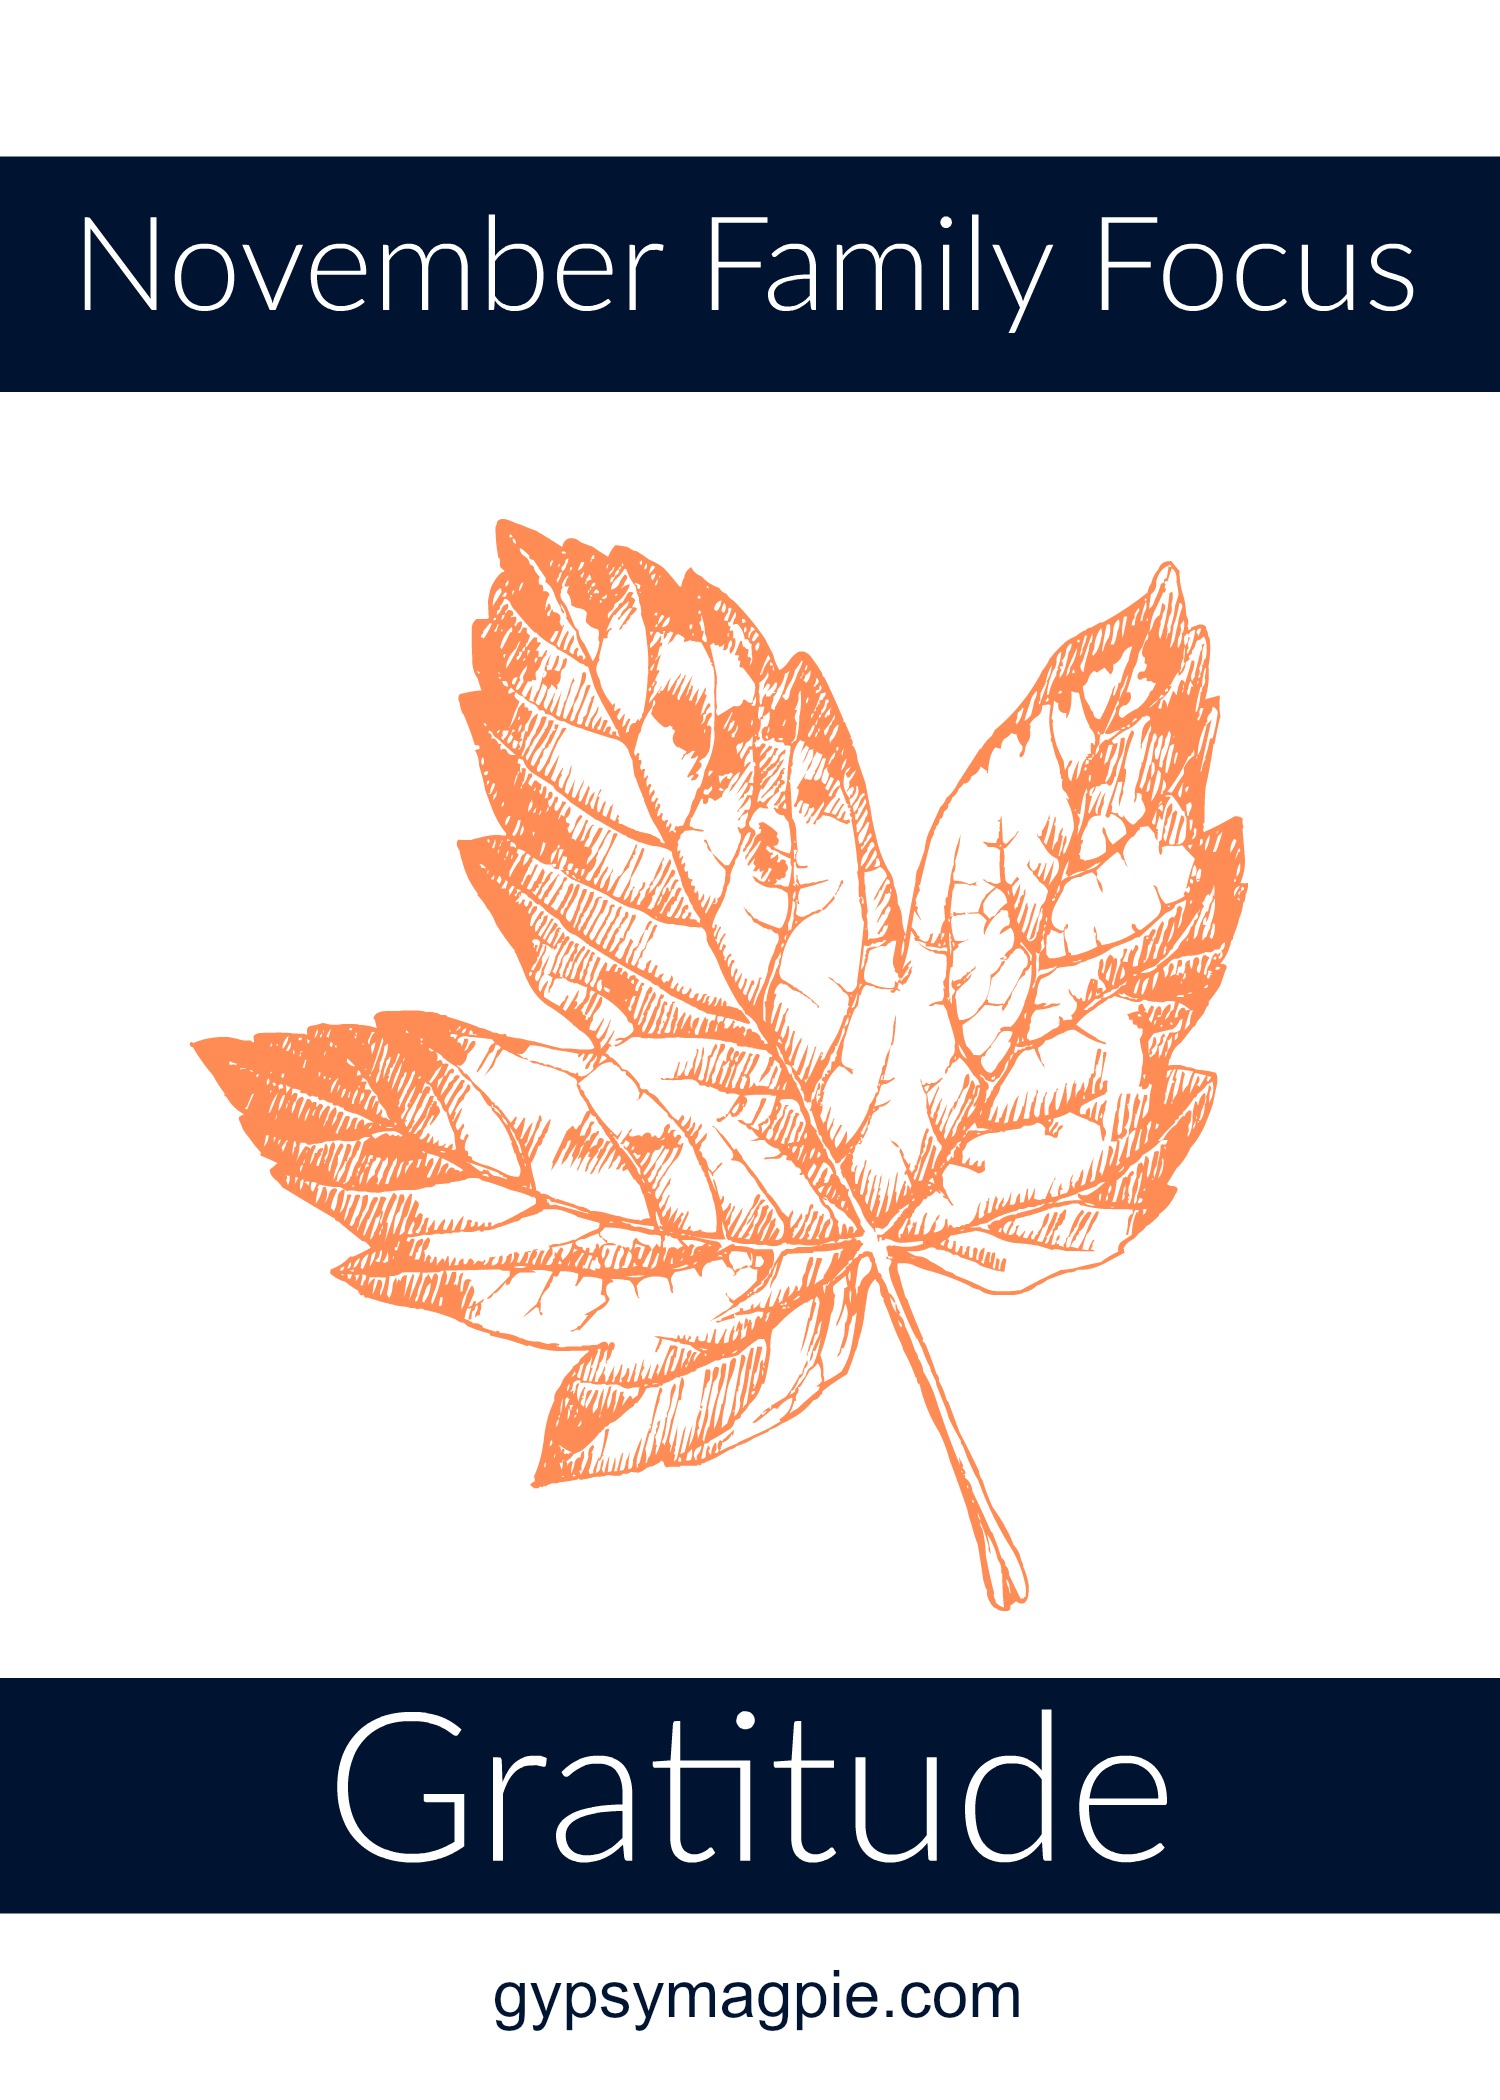 November Family Focus: Gratitude {Gypsy Magpie}